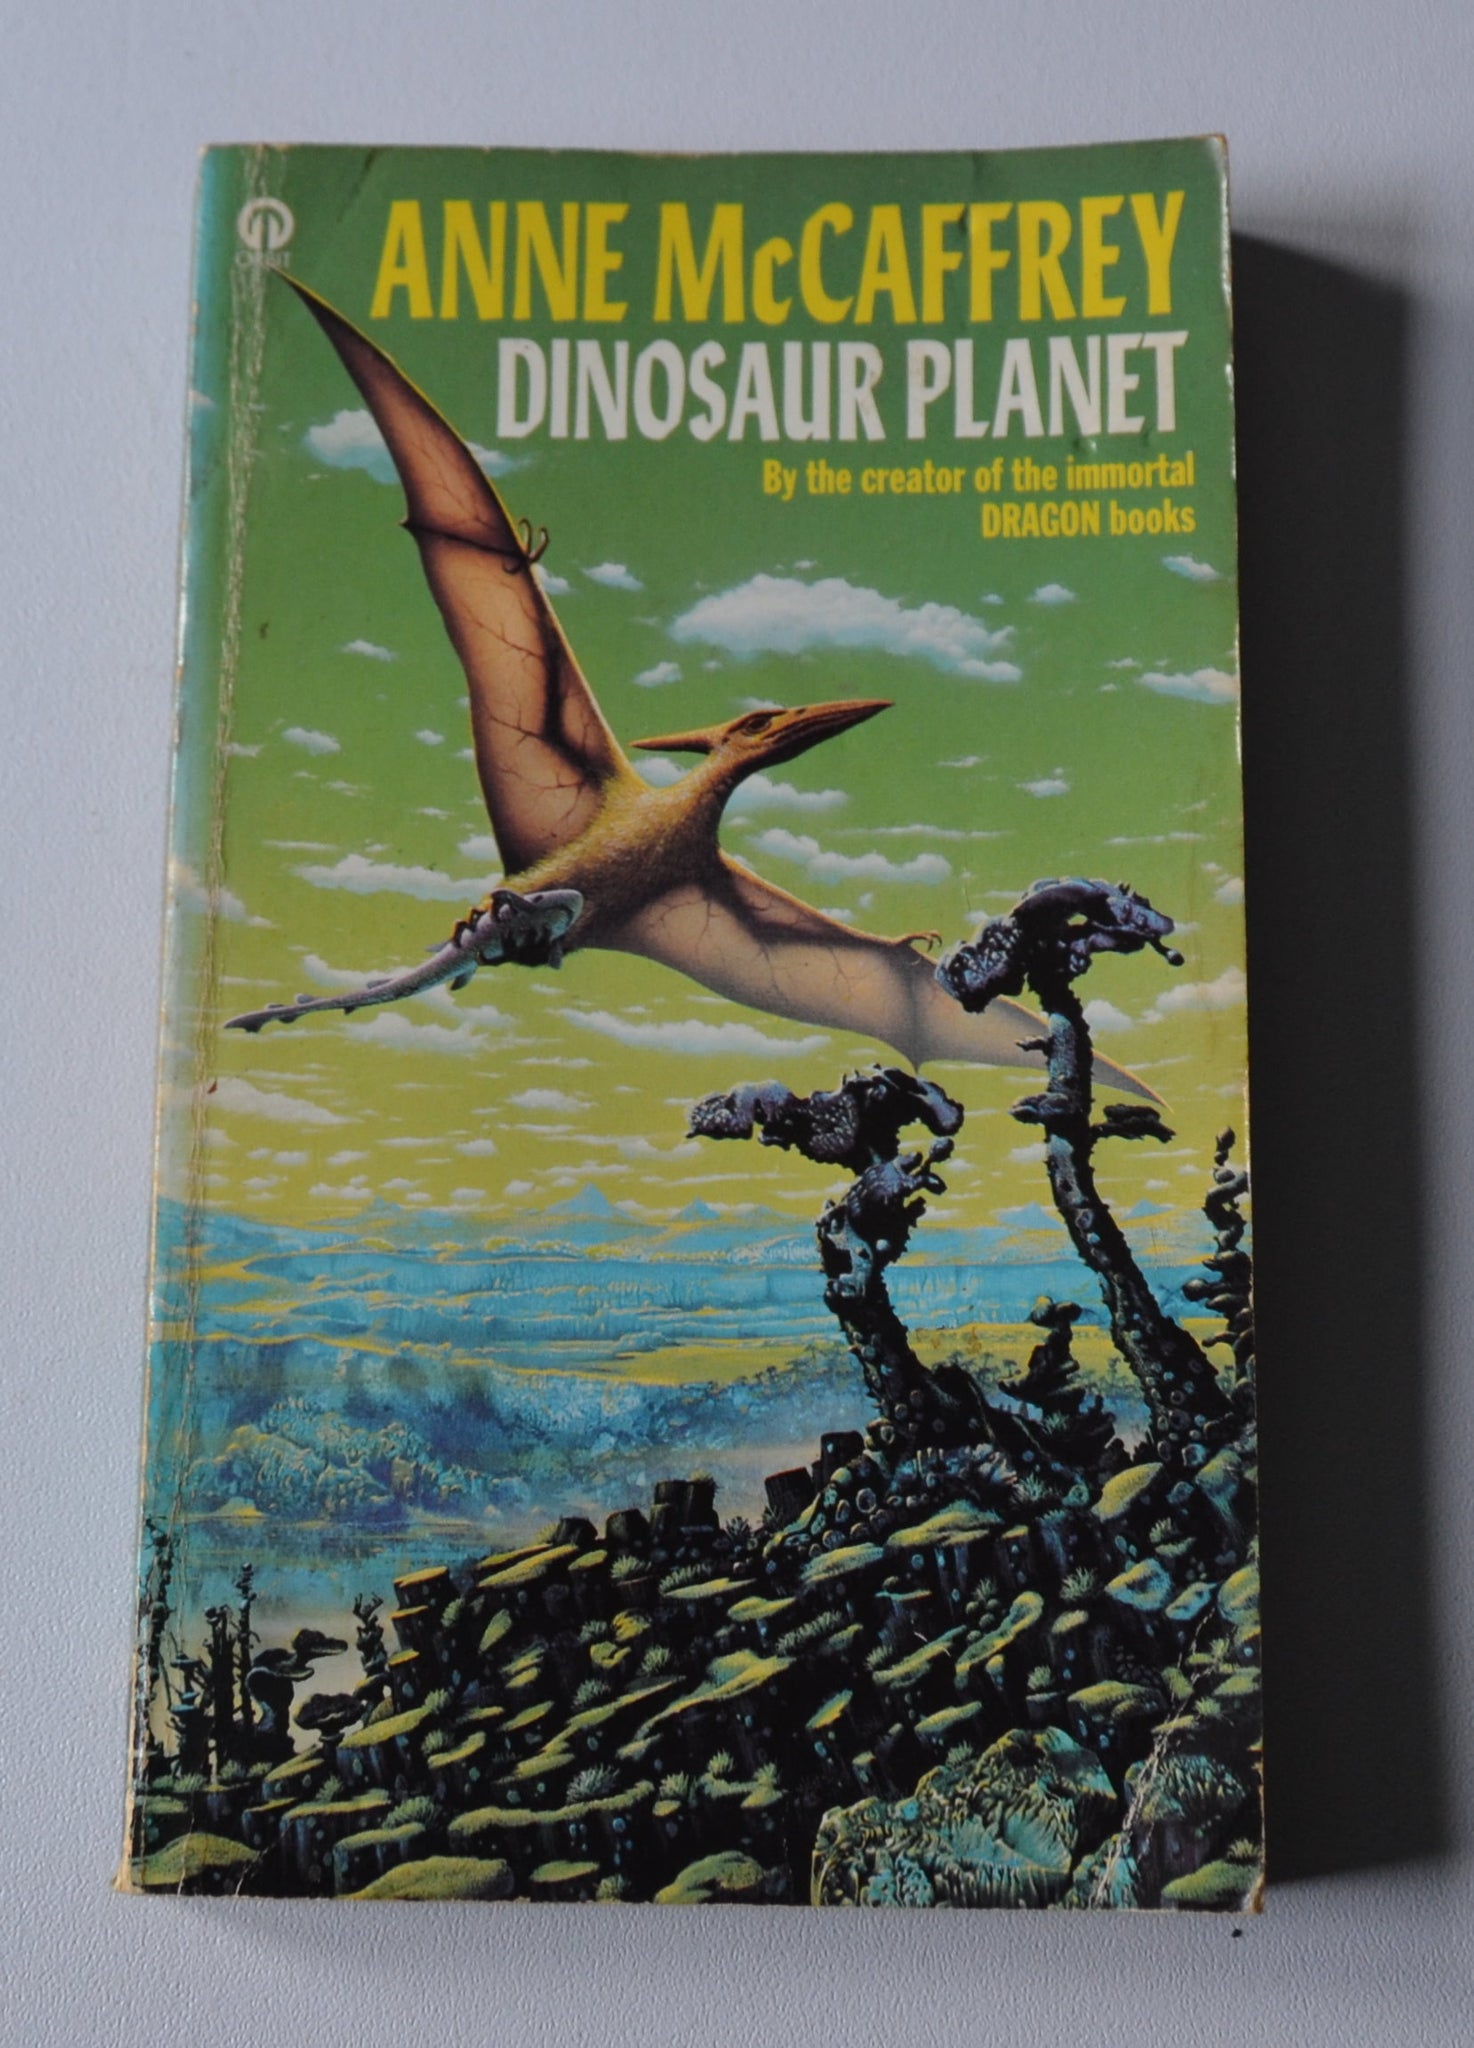 Dinosaur Planet - Dinosaur Planet Book 1